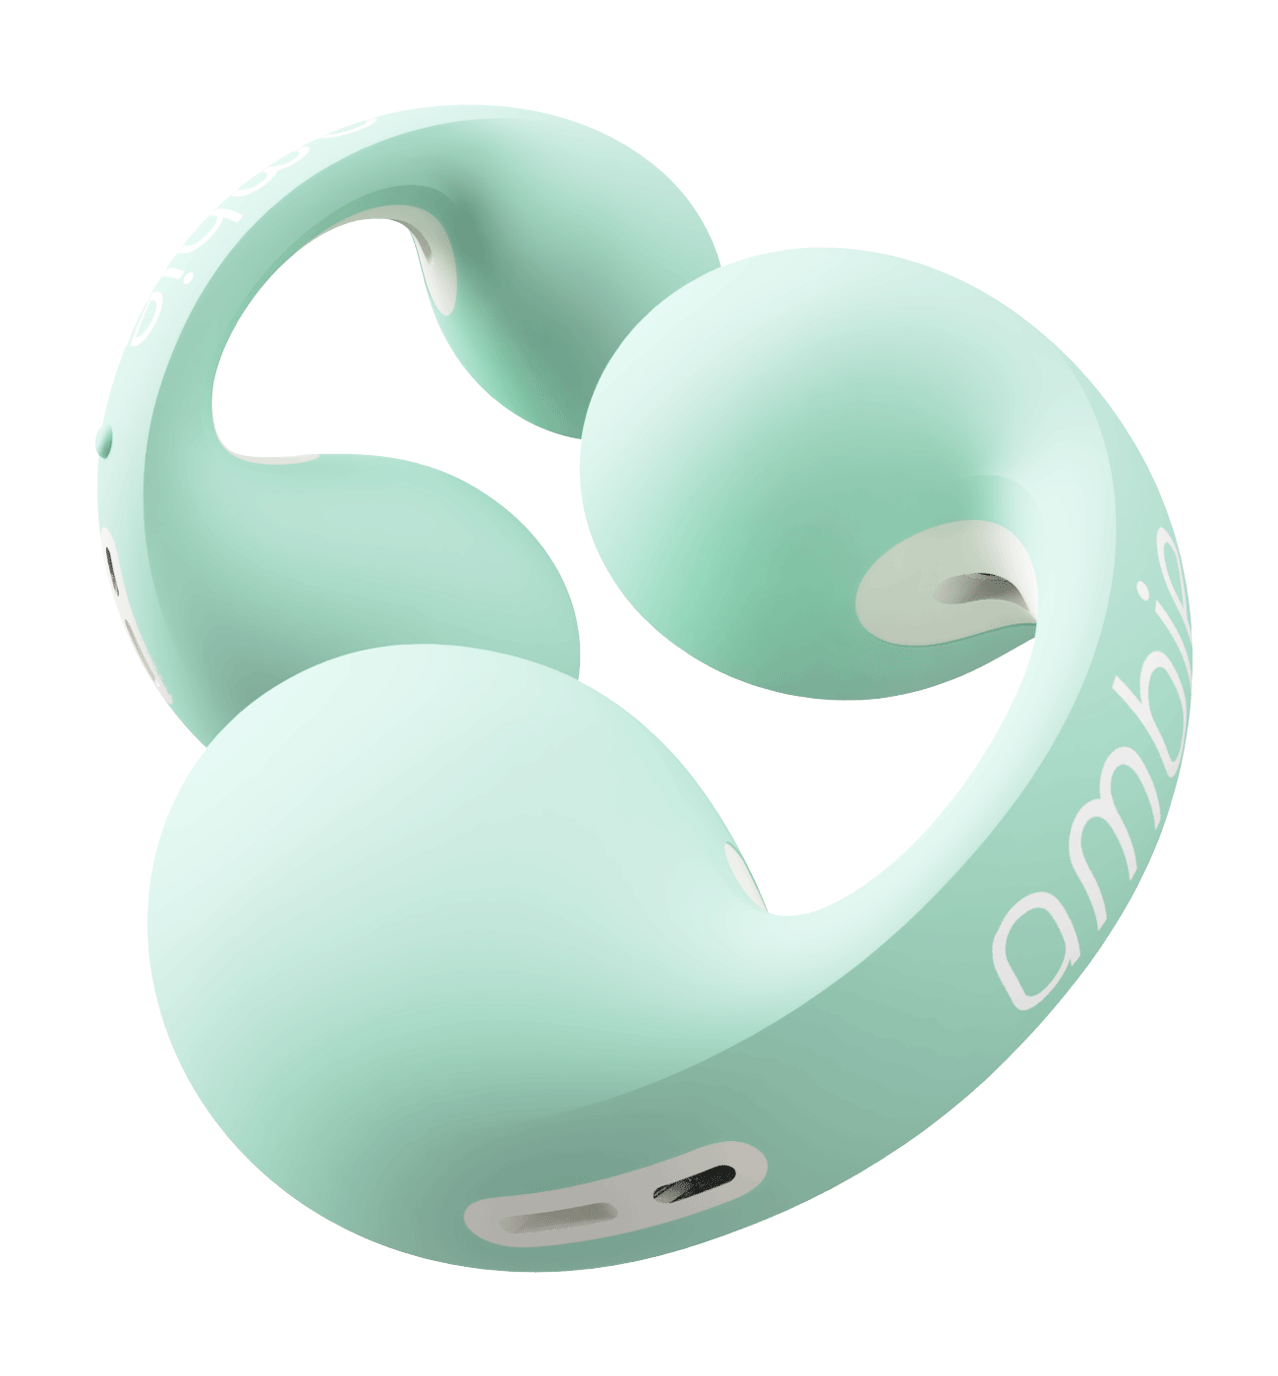 ambie完全ワイヤレスモデルAM-TW01| 耳をふさがないイヤホンambie 